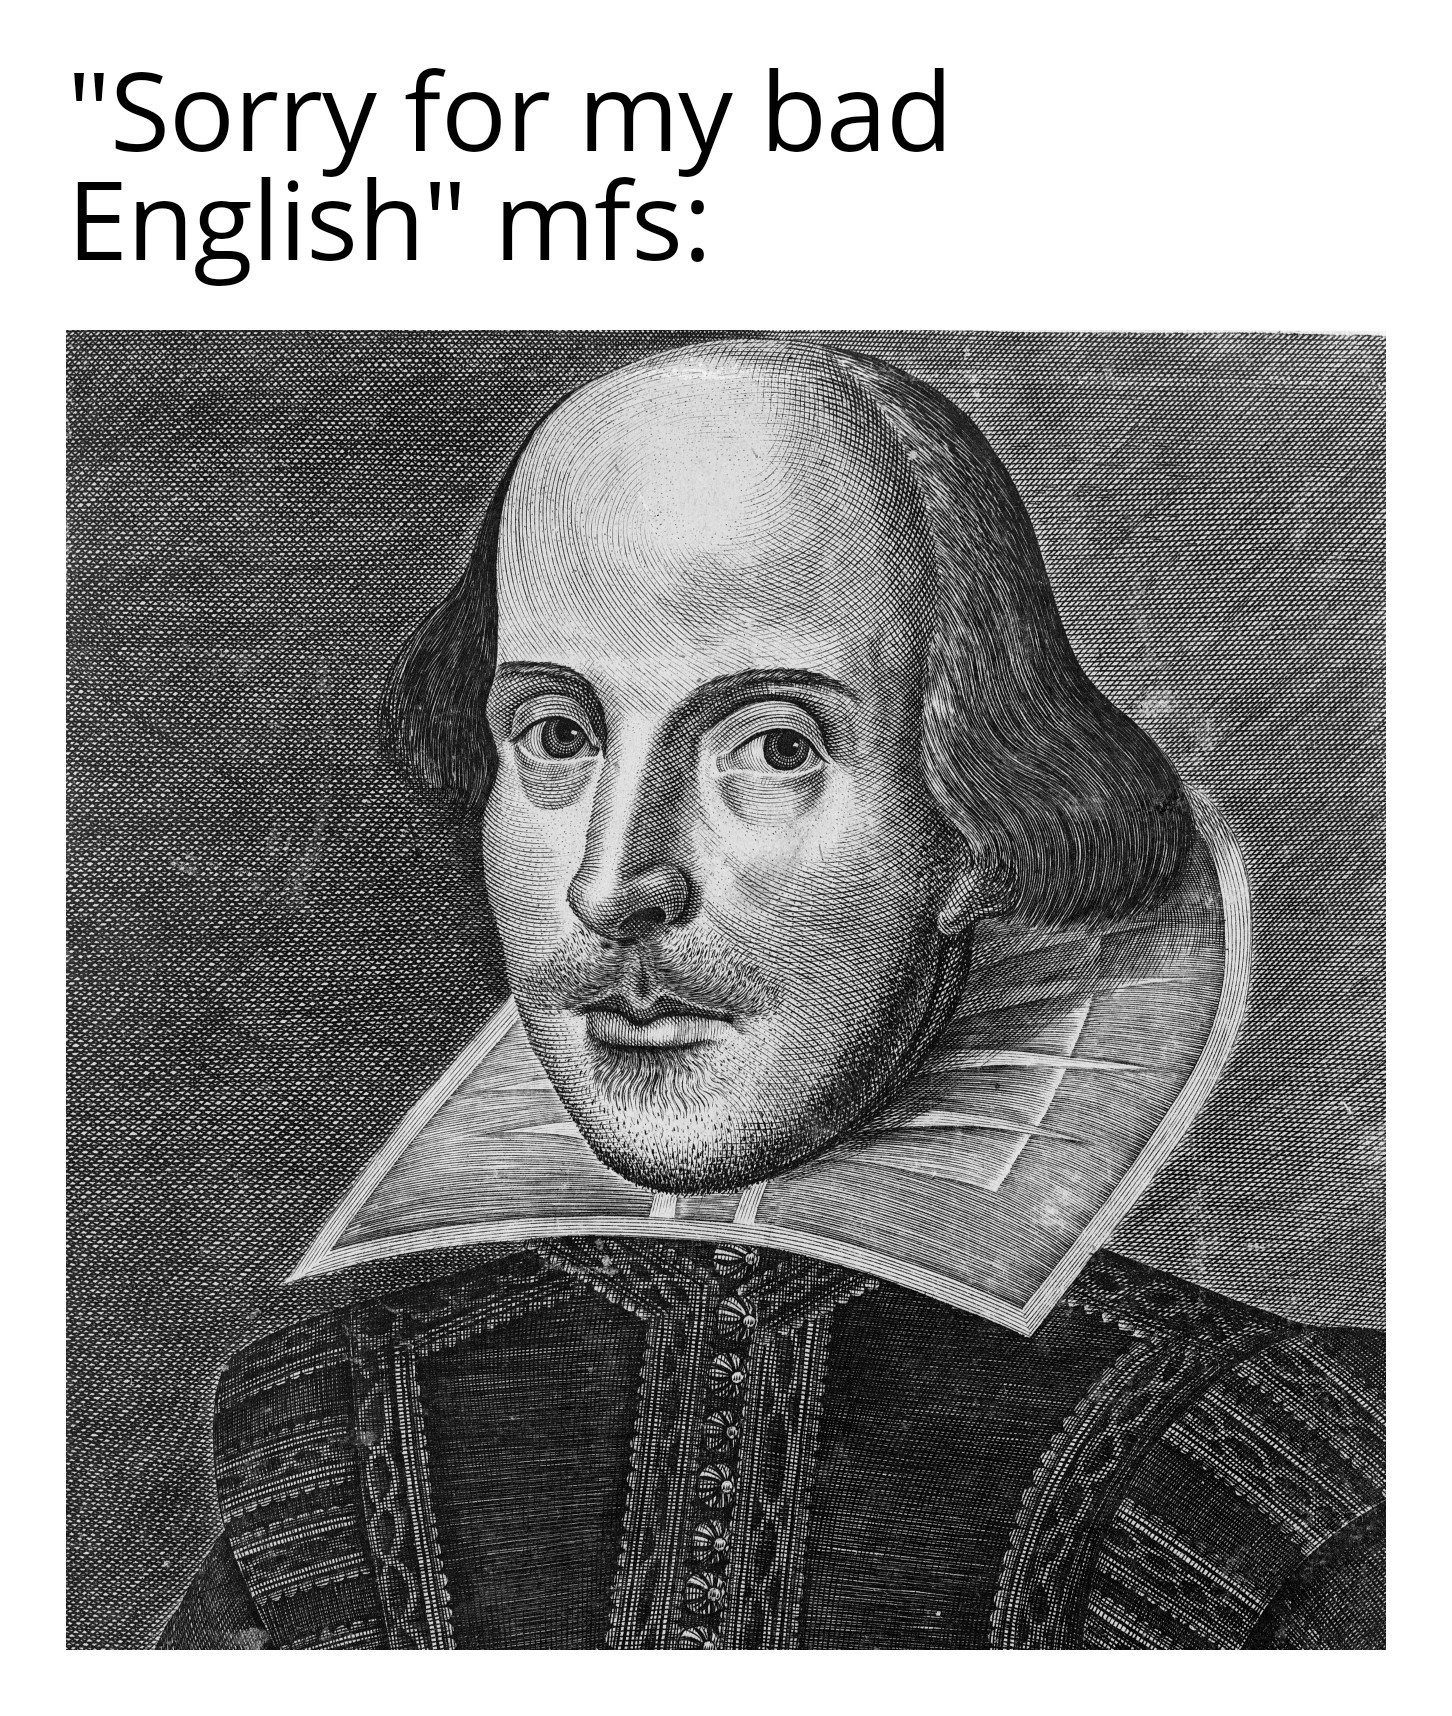 dank memes - william shakespeare - "Sorry for my bad English" mfs